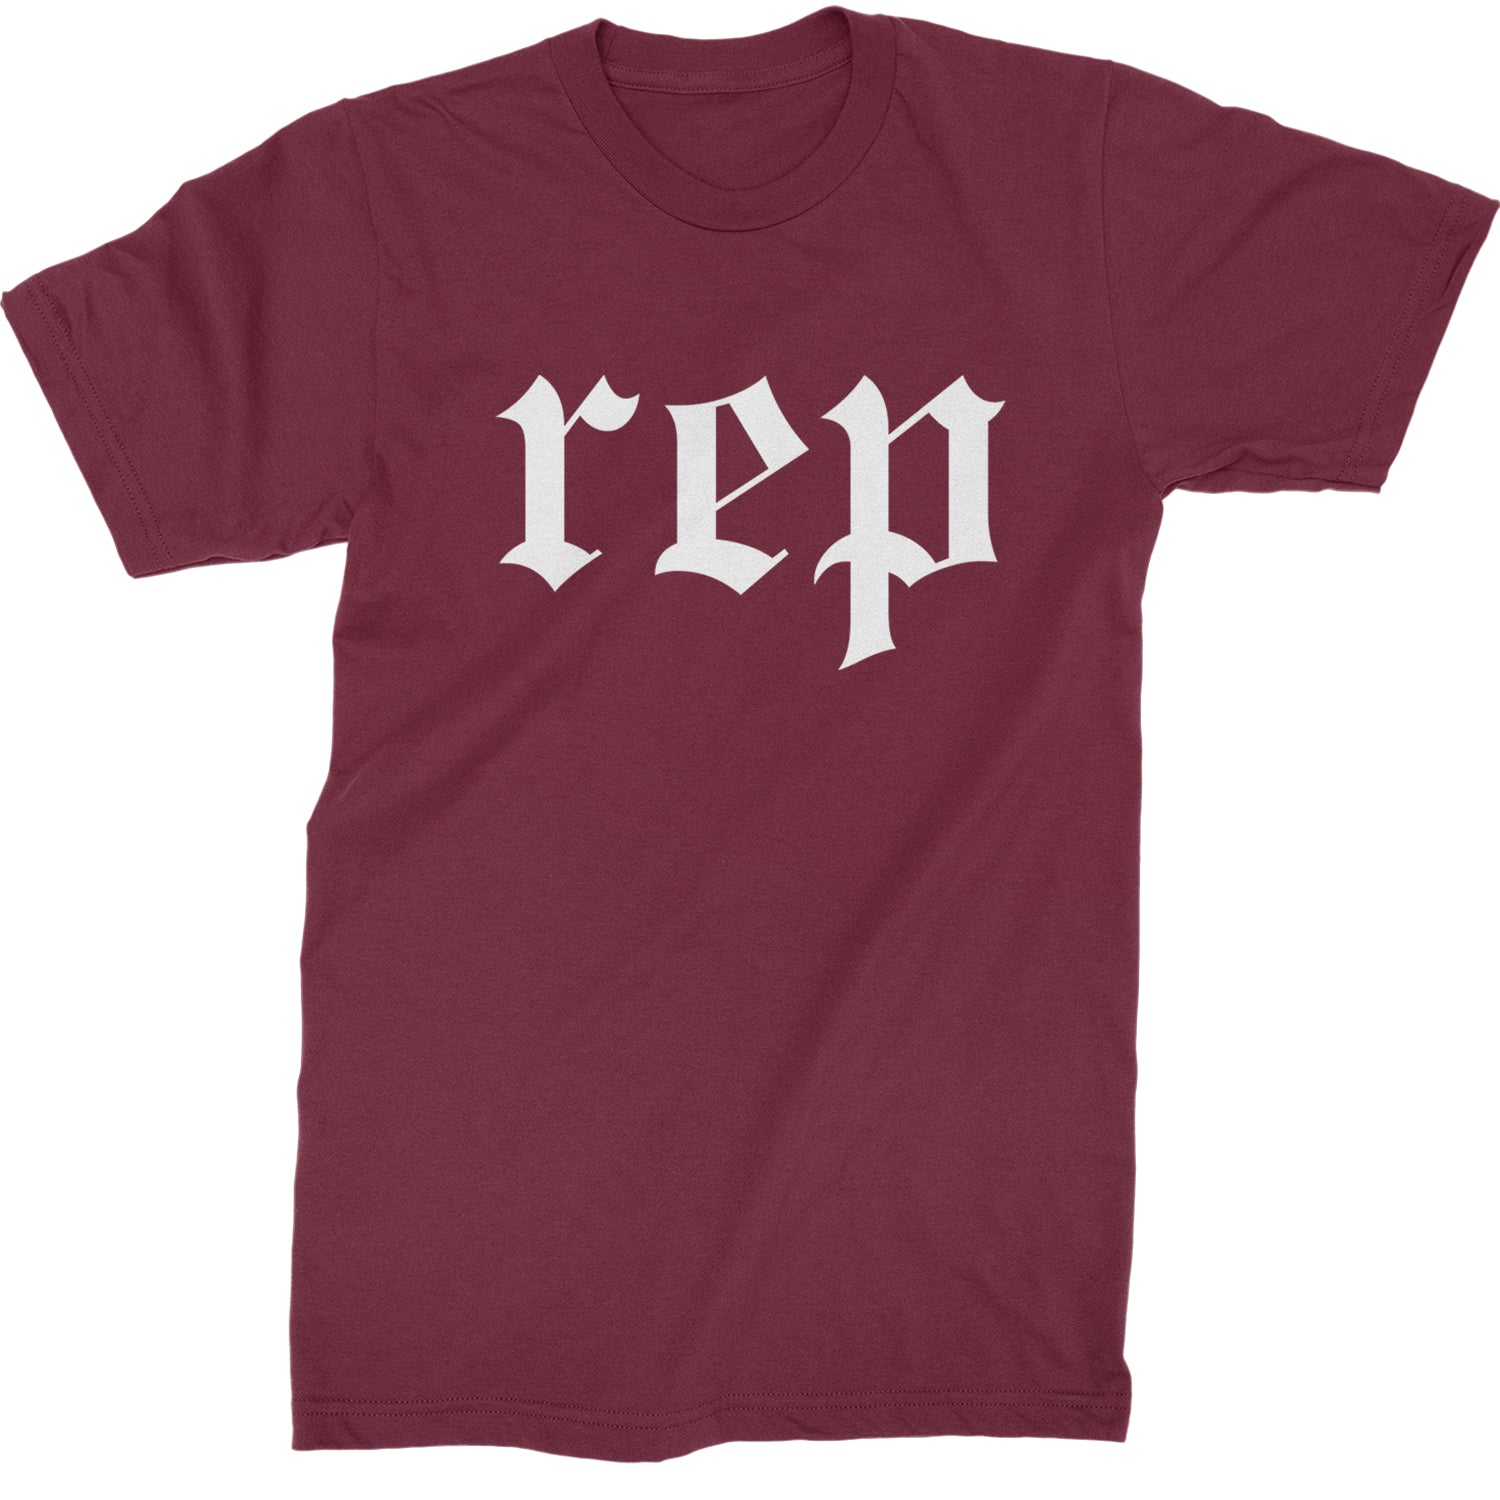 REP Reputation Eras Music Lover Gift Fan Favorite Mens T-shirt Maroon